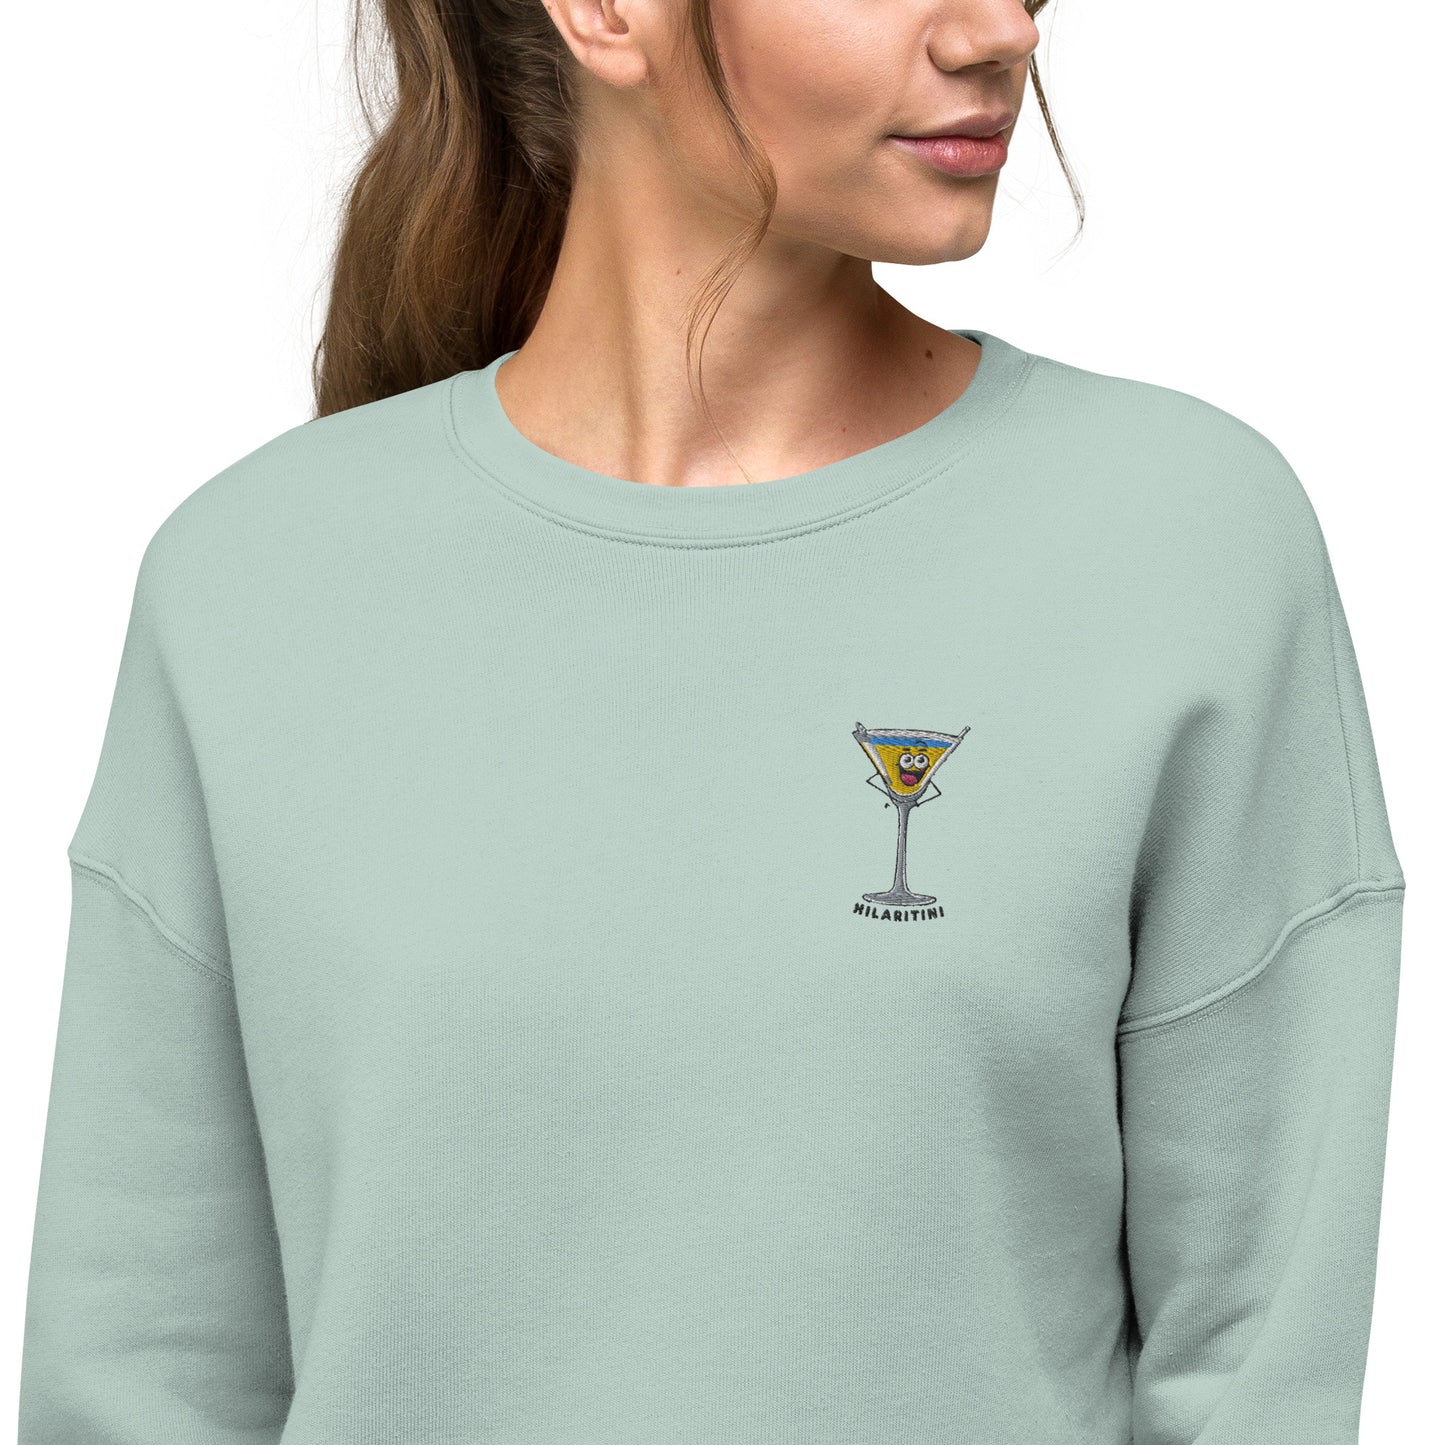 Hilaritini Embroidered Crop Sweatshirt